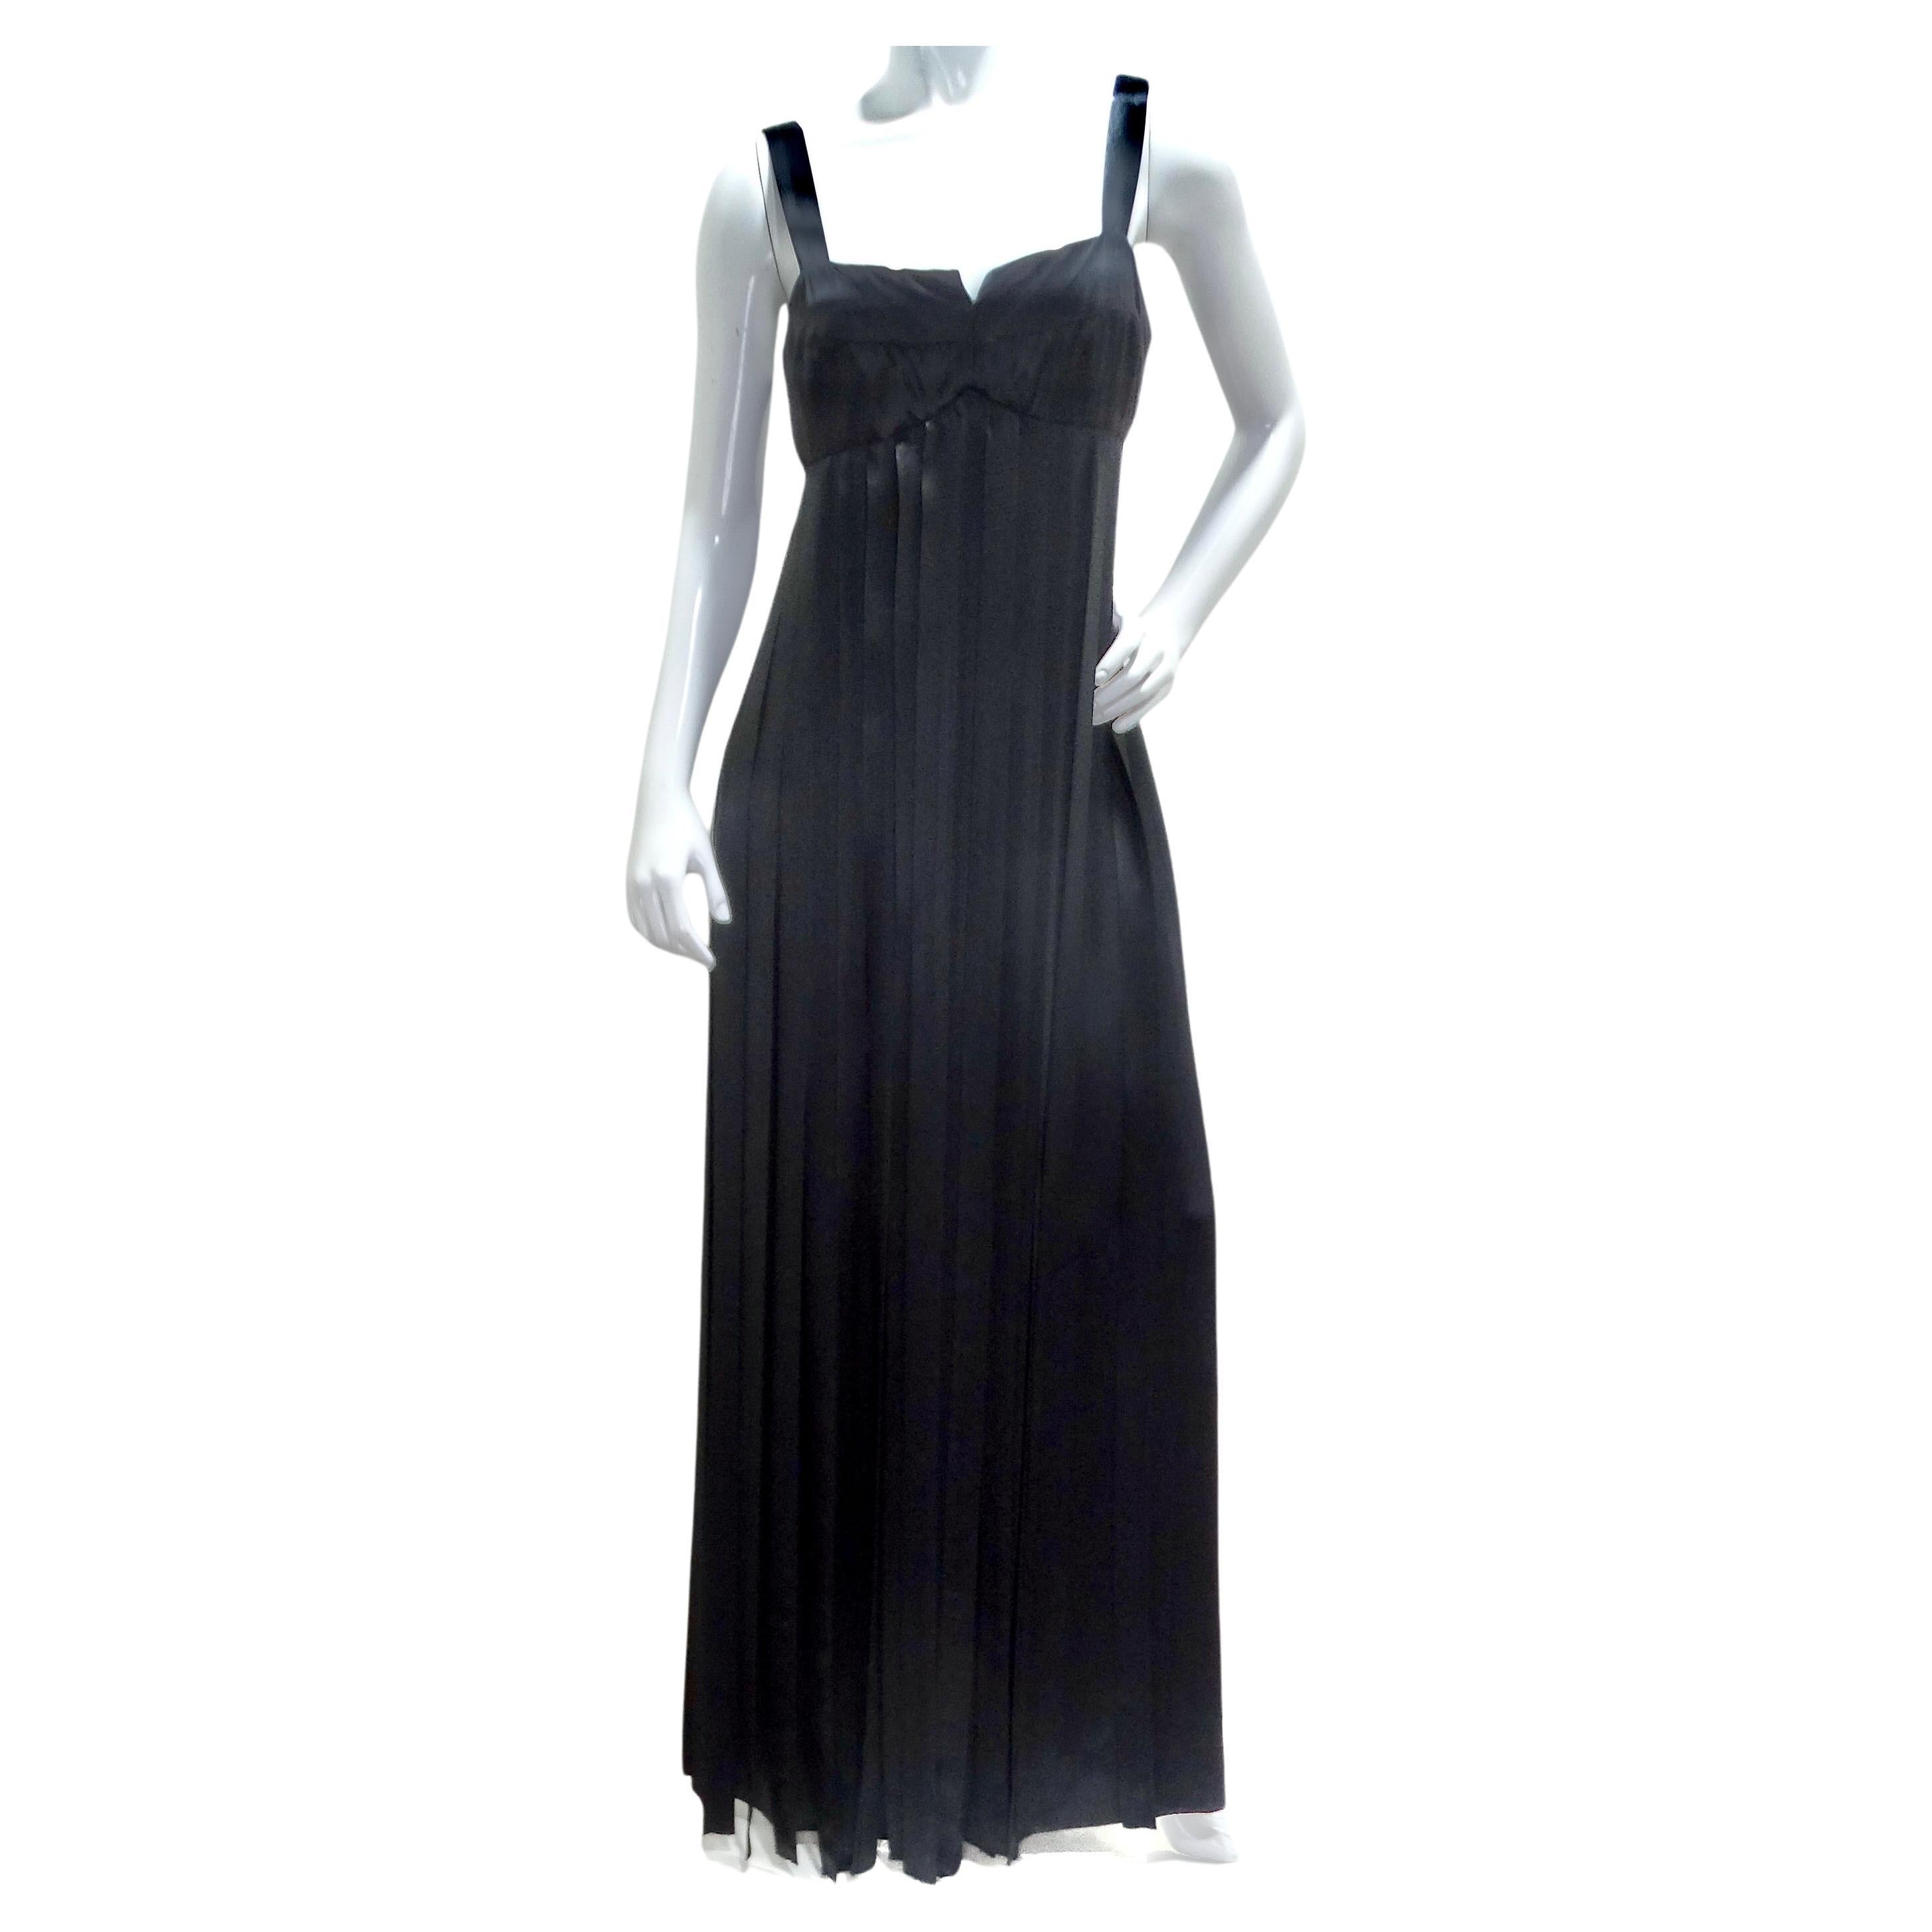 The Lilly Rubin 1960s Black Carwash Maxi Dress